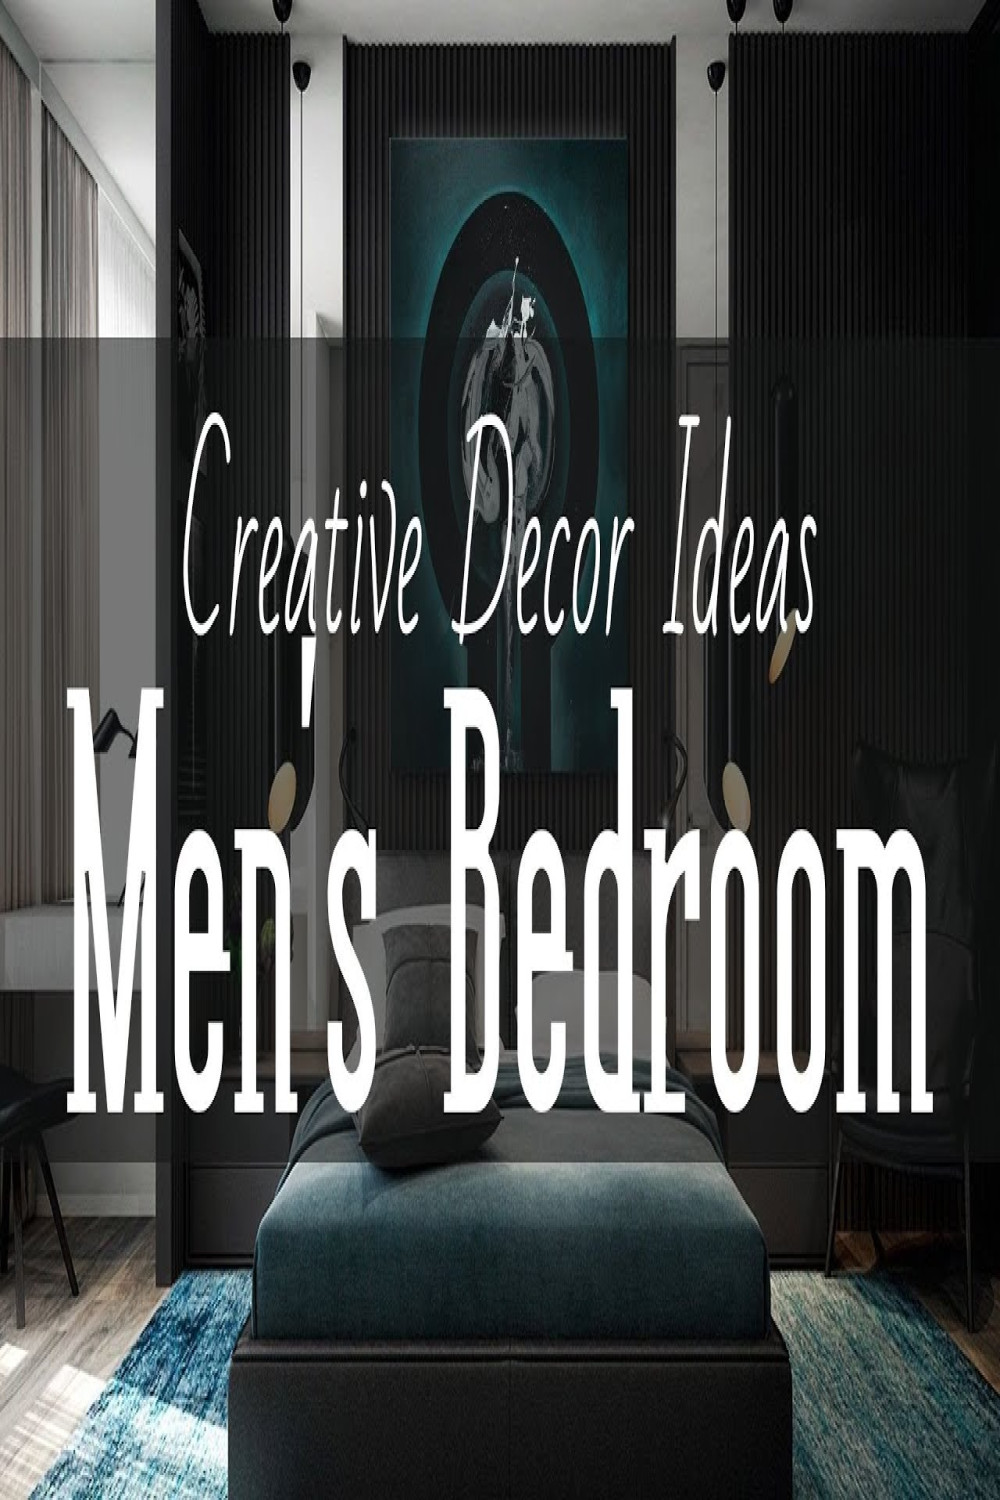 Best Contemporary Bedroom Design and Decor Ideas for Men / INTERIOR  DESIGN / HOME DECOR